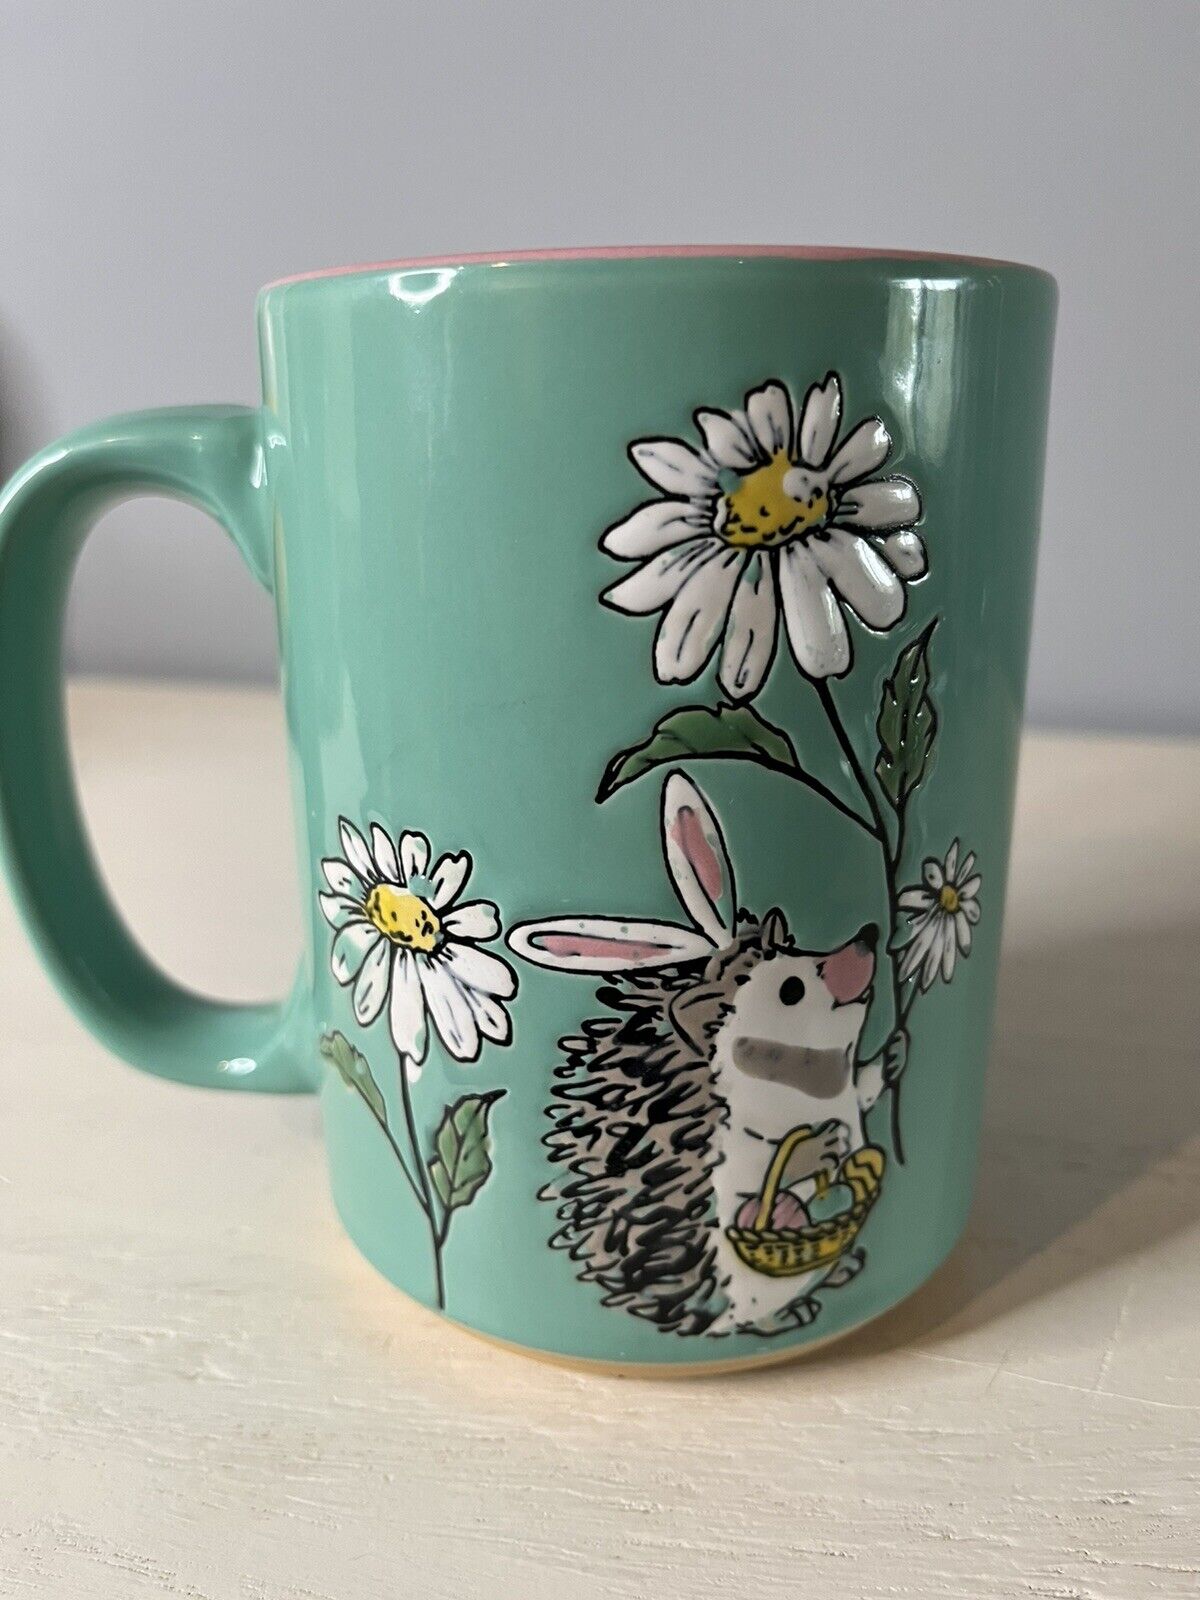 spectrum designz mug hedgehog Easter spring time green with pink new rare